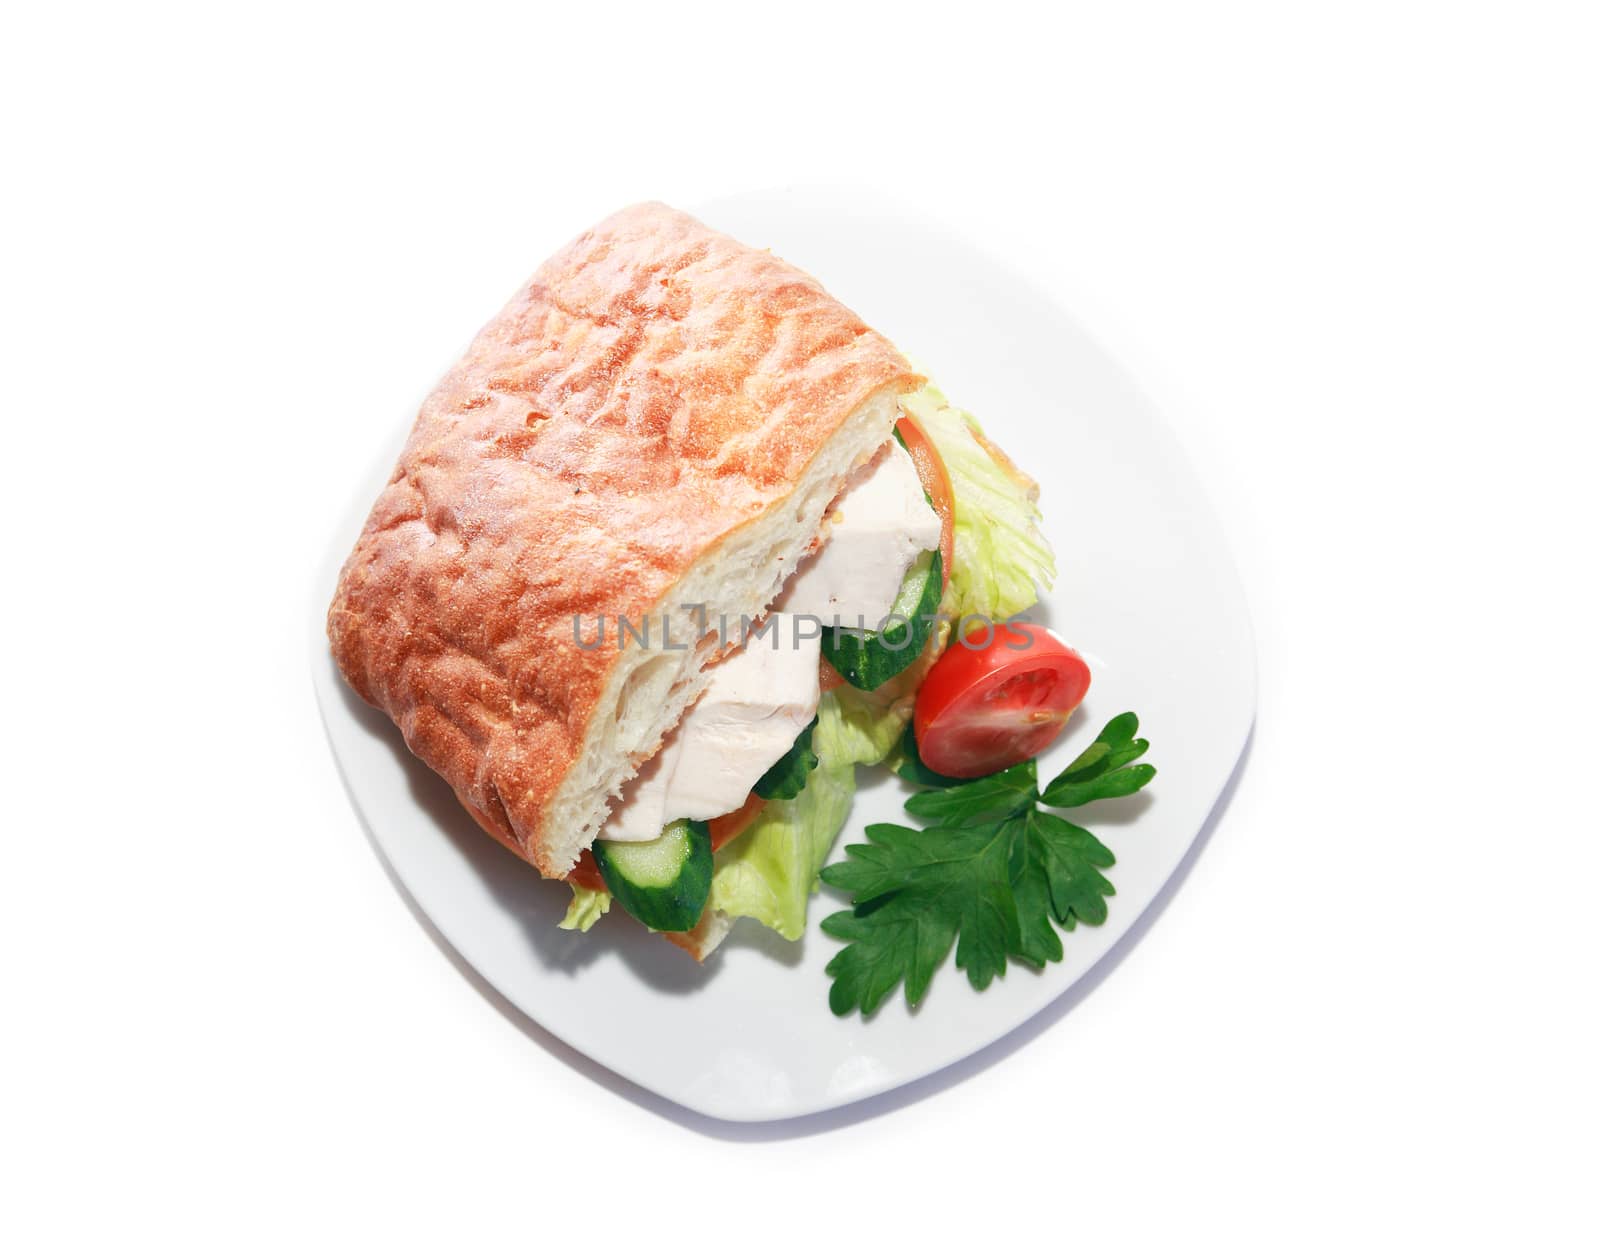 Freshness delicious chicken sandwich on plate against white background